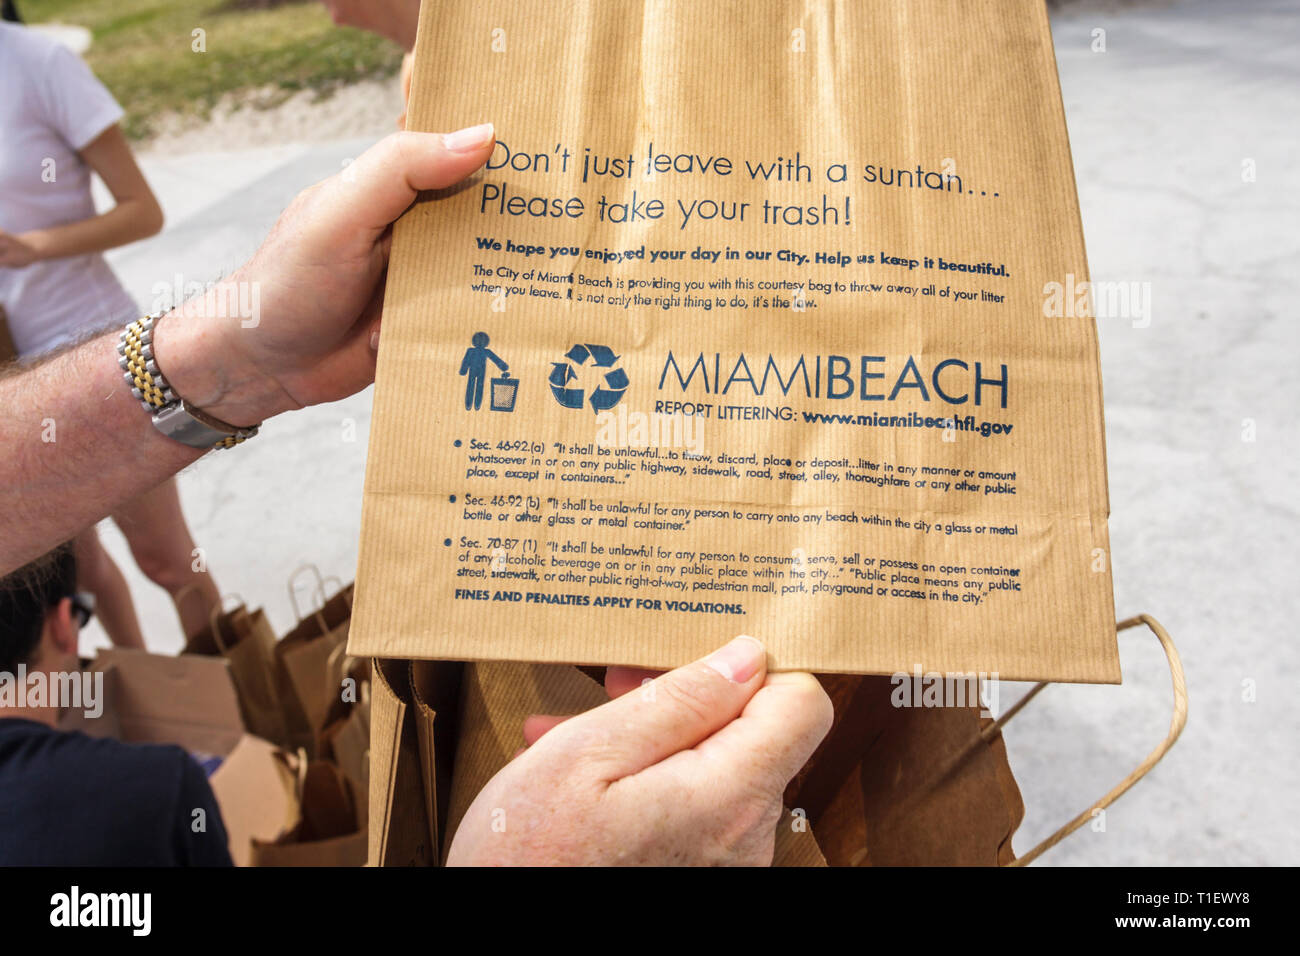 Miami Beach Florida, Lummus Park, sin basura, sin basura, bolsa de basura biodegradable, contaminación, limpieza, información, ley local, conciencia, FL090310001 Foto de stock